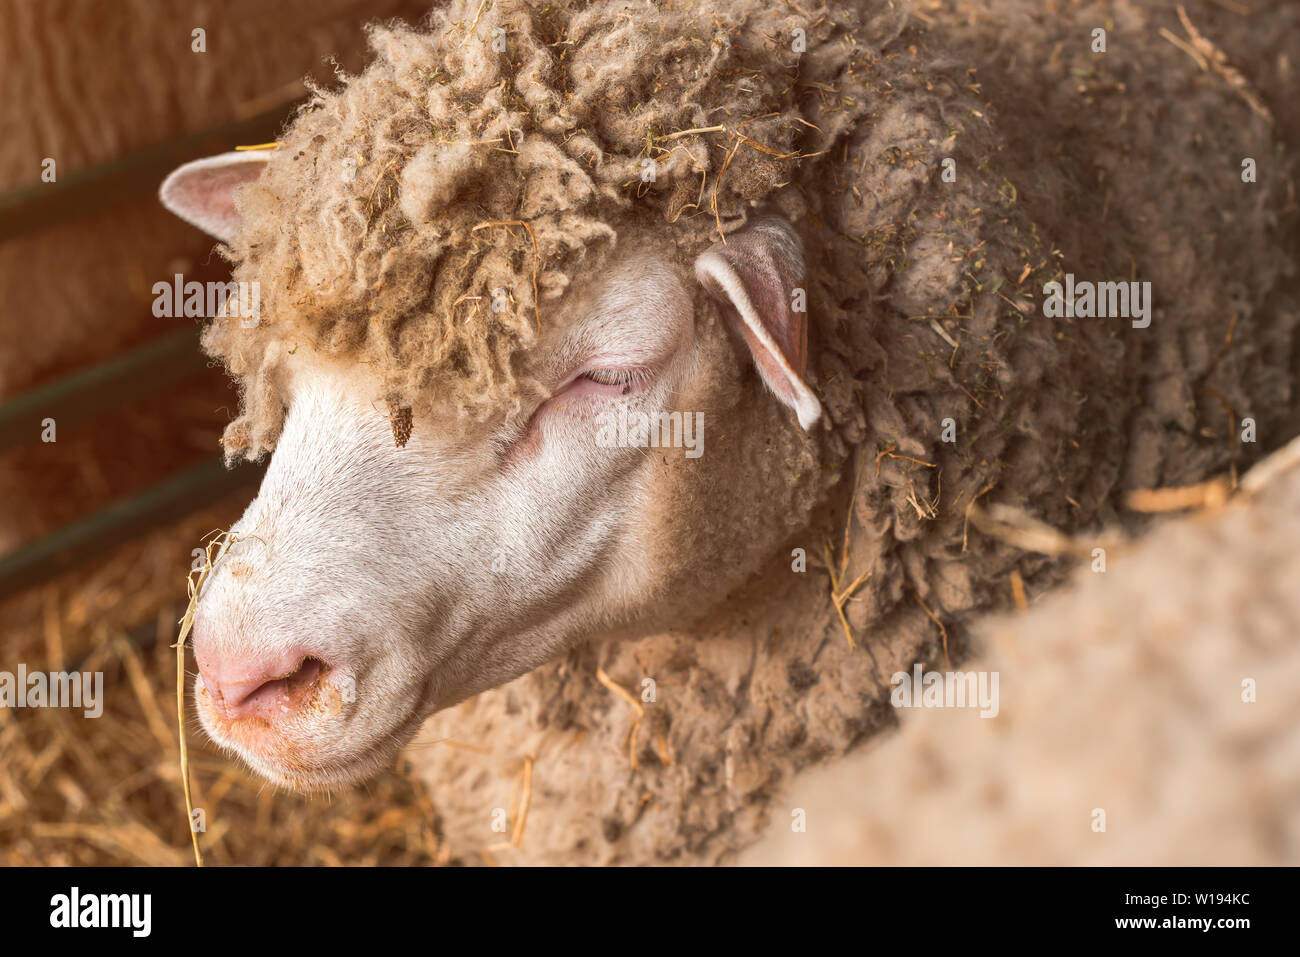 Sheep in pen on livestock farm, doemstic animals husbandry Stock Photo